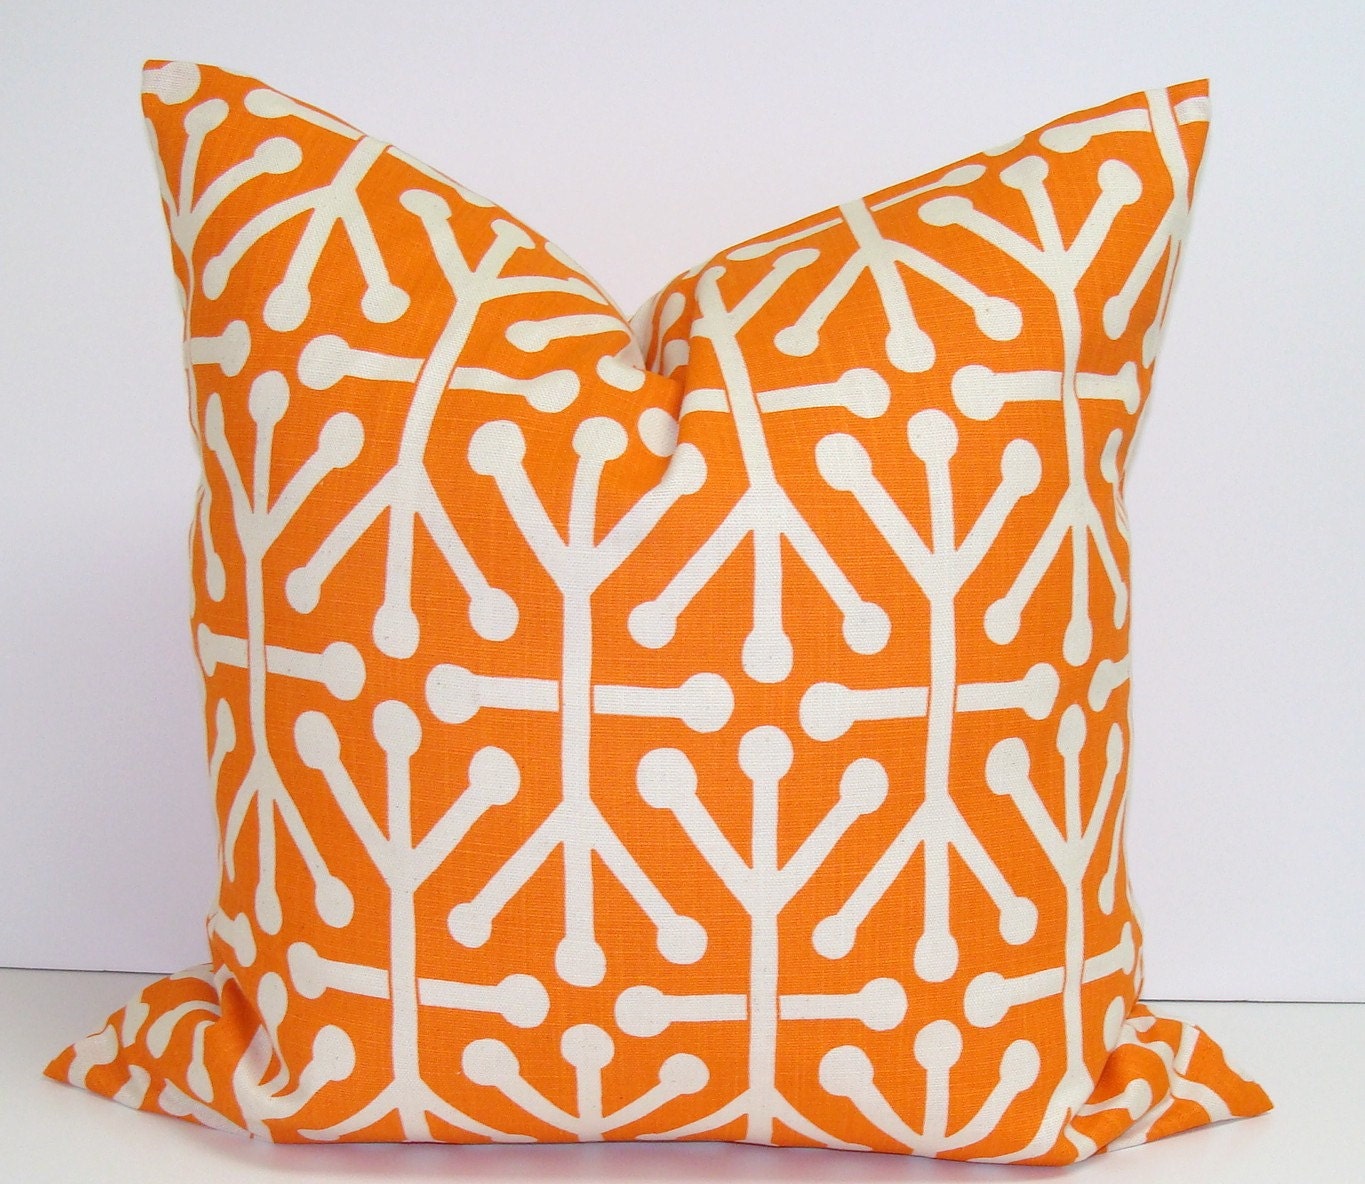 Orange.Pillow.Fall.16x16 inch.Decorator Pillow Cover.Housewares.Home Decor.Fall Decor.Dominos.Geometric.